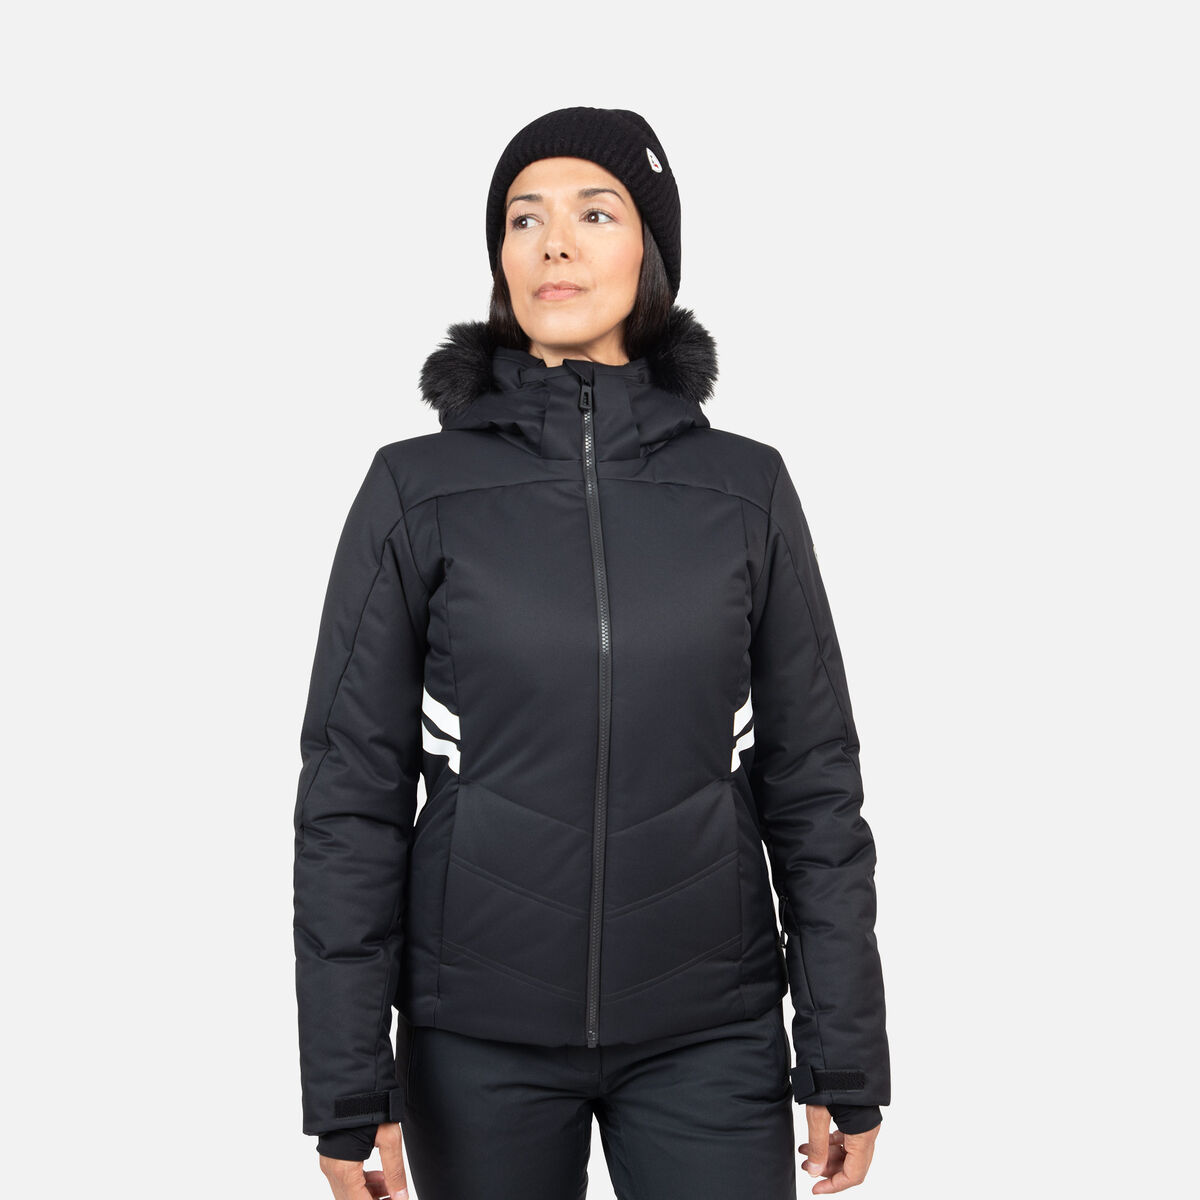 Women's Ski Jacket | Ski & snowboard jackets | Rossignol